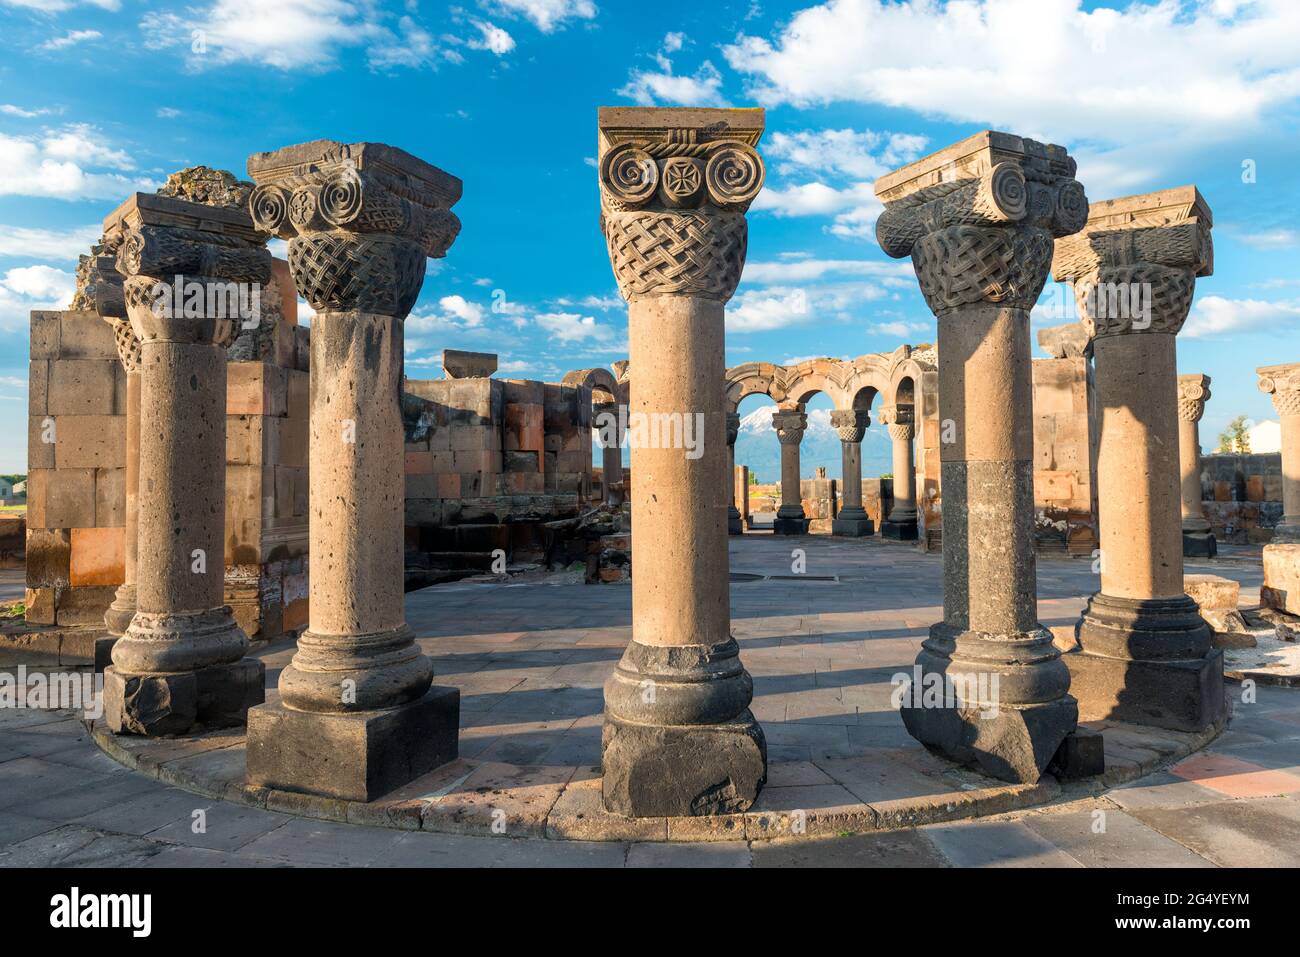 Columns and ruins of the ancient Zvartnots temple, a landmark of Armenia Stock Photo